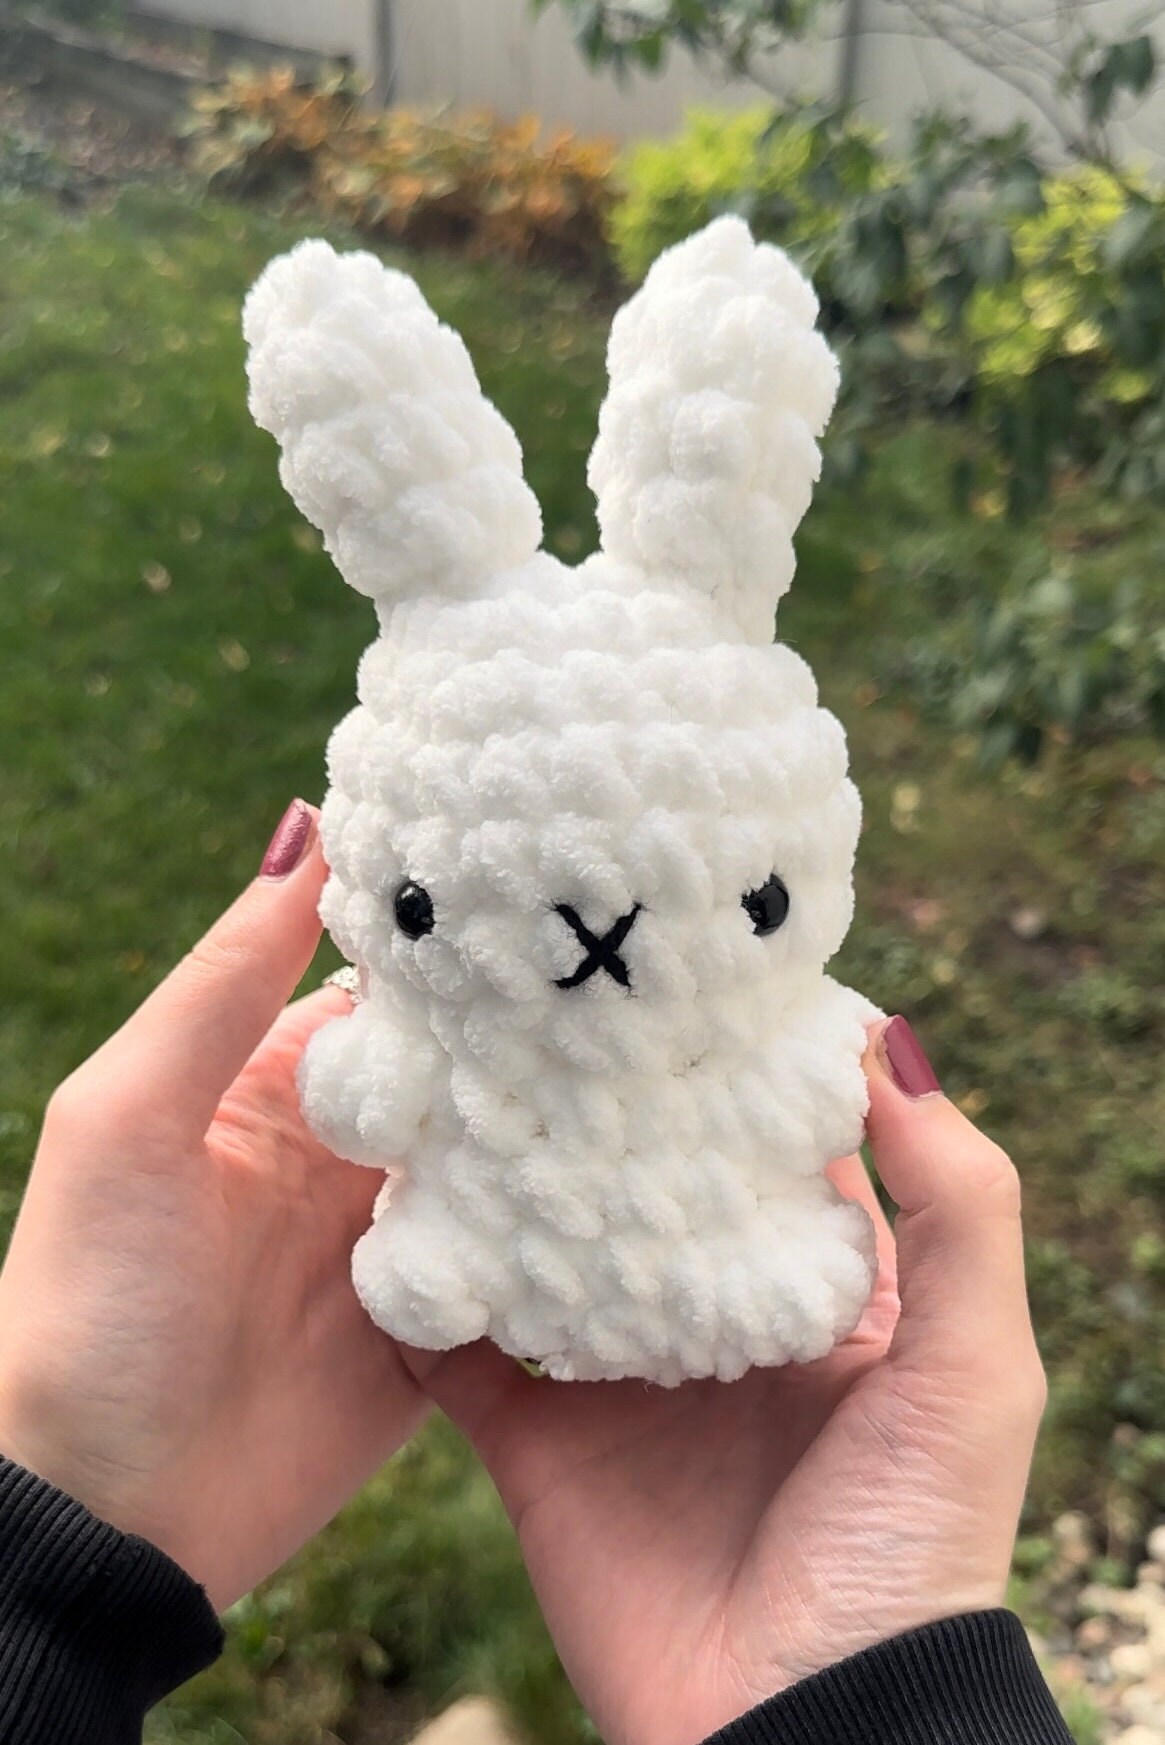 Paradisecrochetkiss Crocheted Miffy Bunny Keychain !